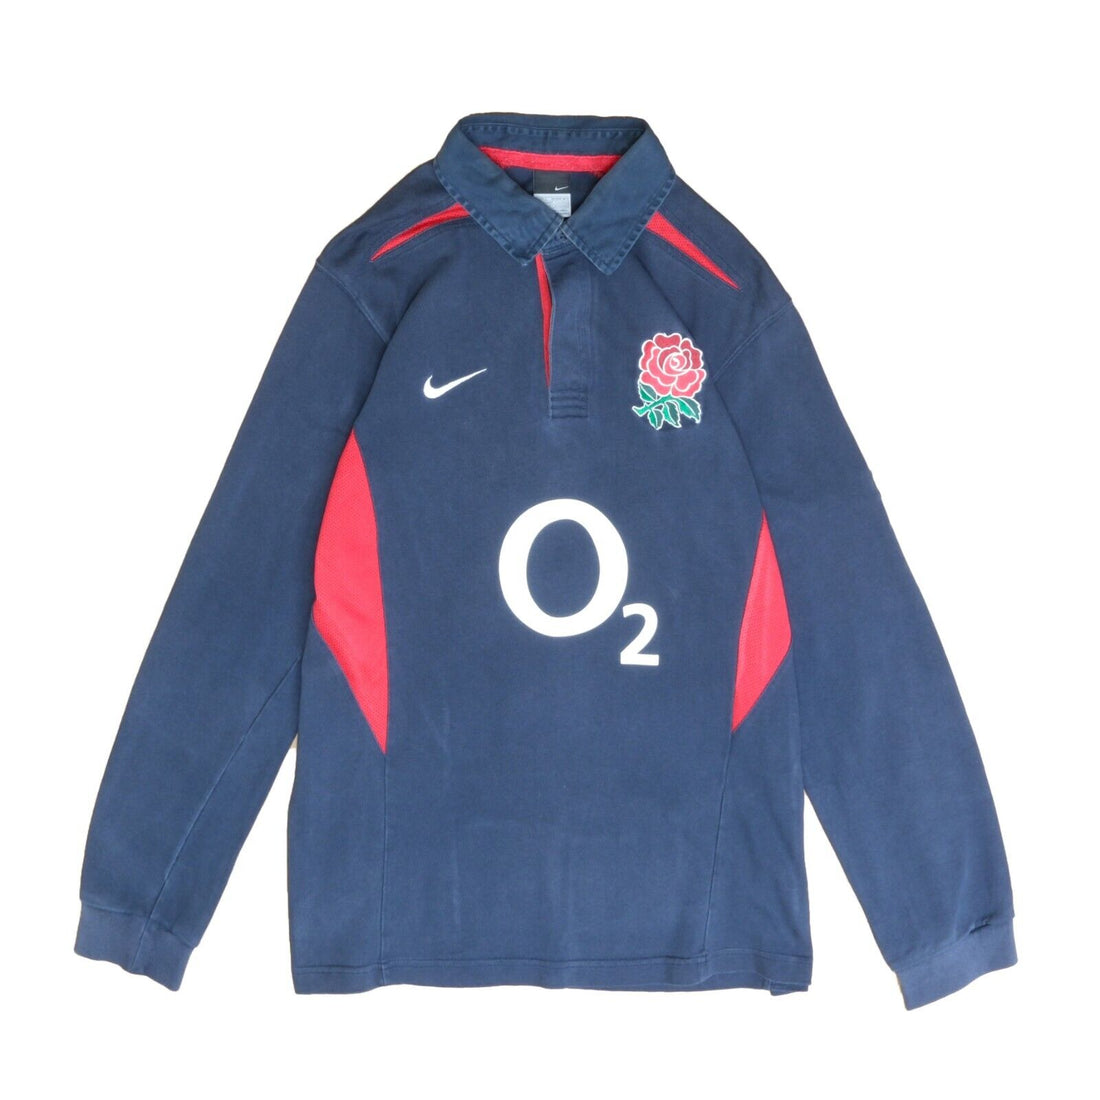 Vintage England National Union Team Nike Rugby Shirt Size Large